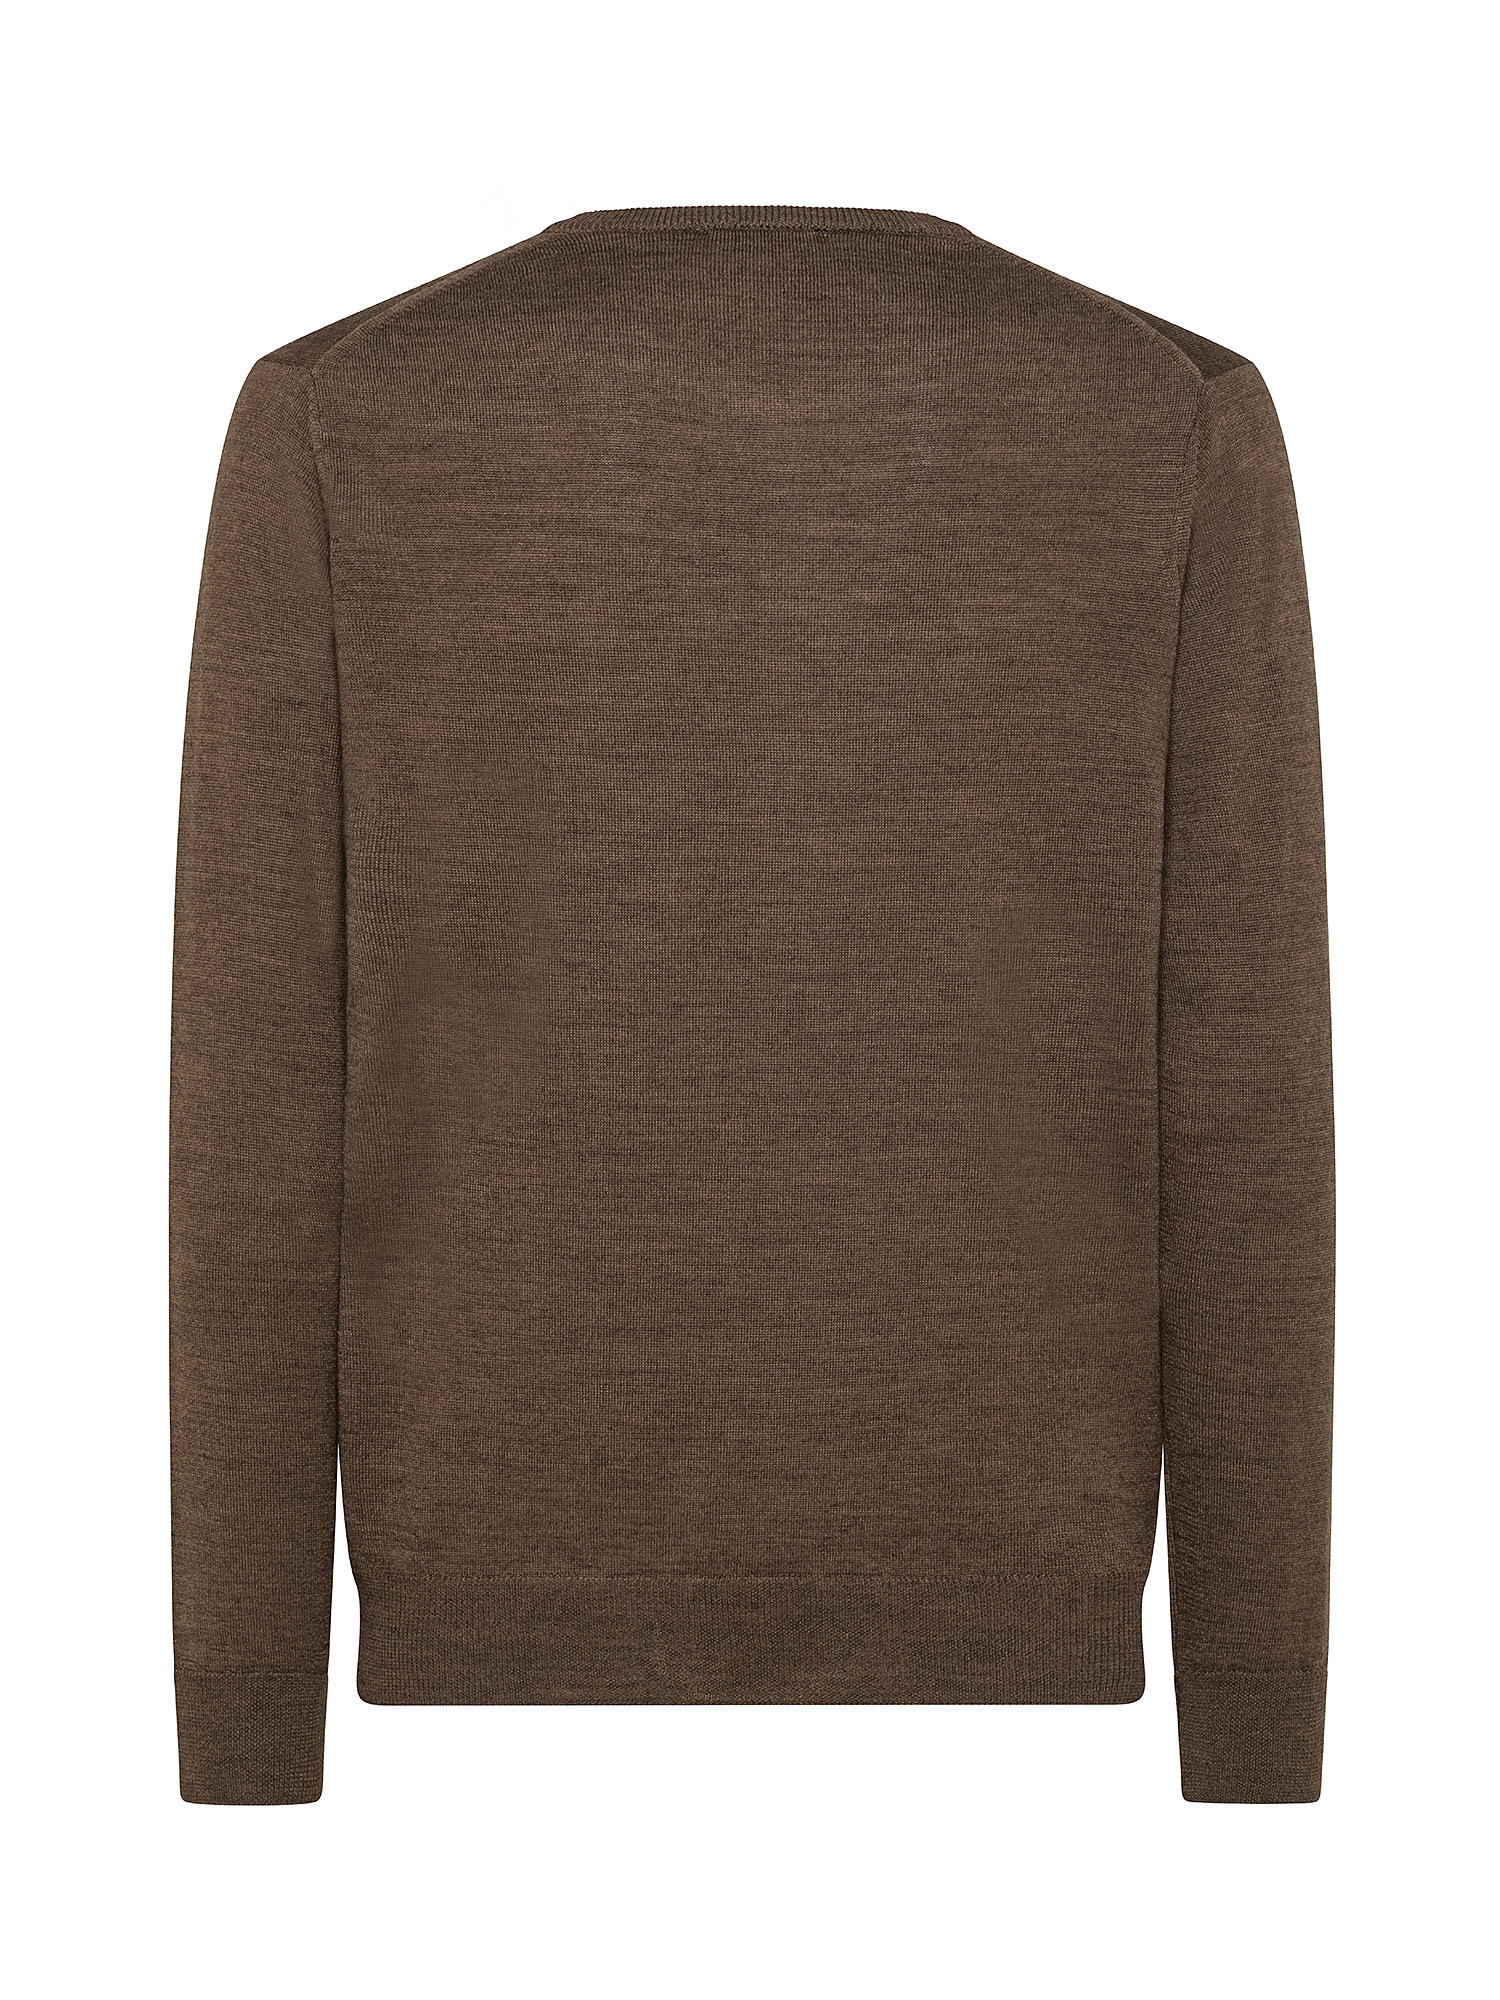 Merino Blend crewneck sweater - Machine washable, Hazelnut Brown, large image number 1